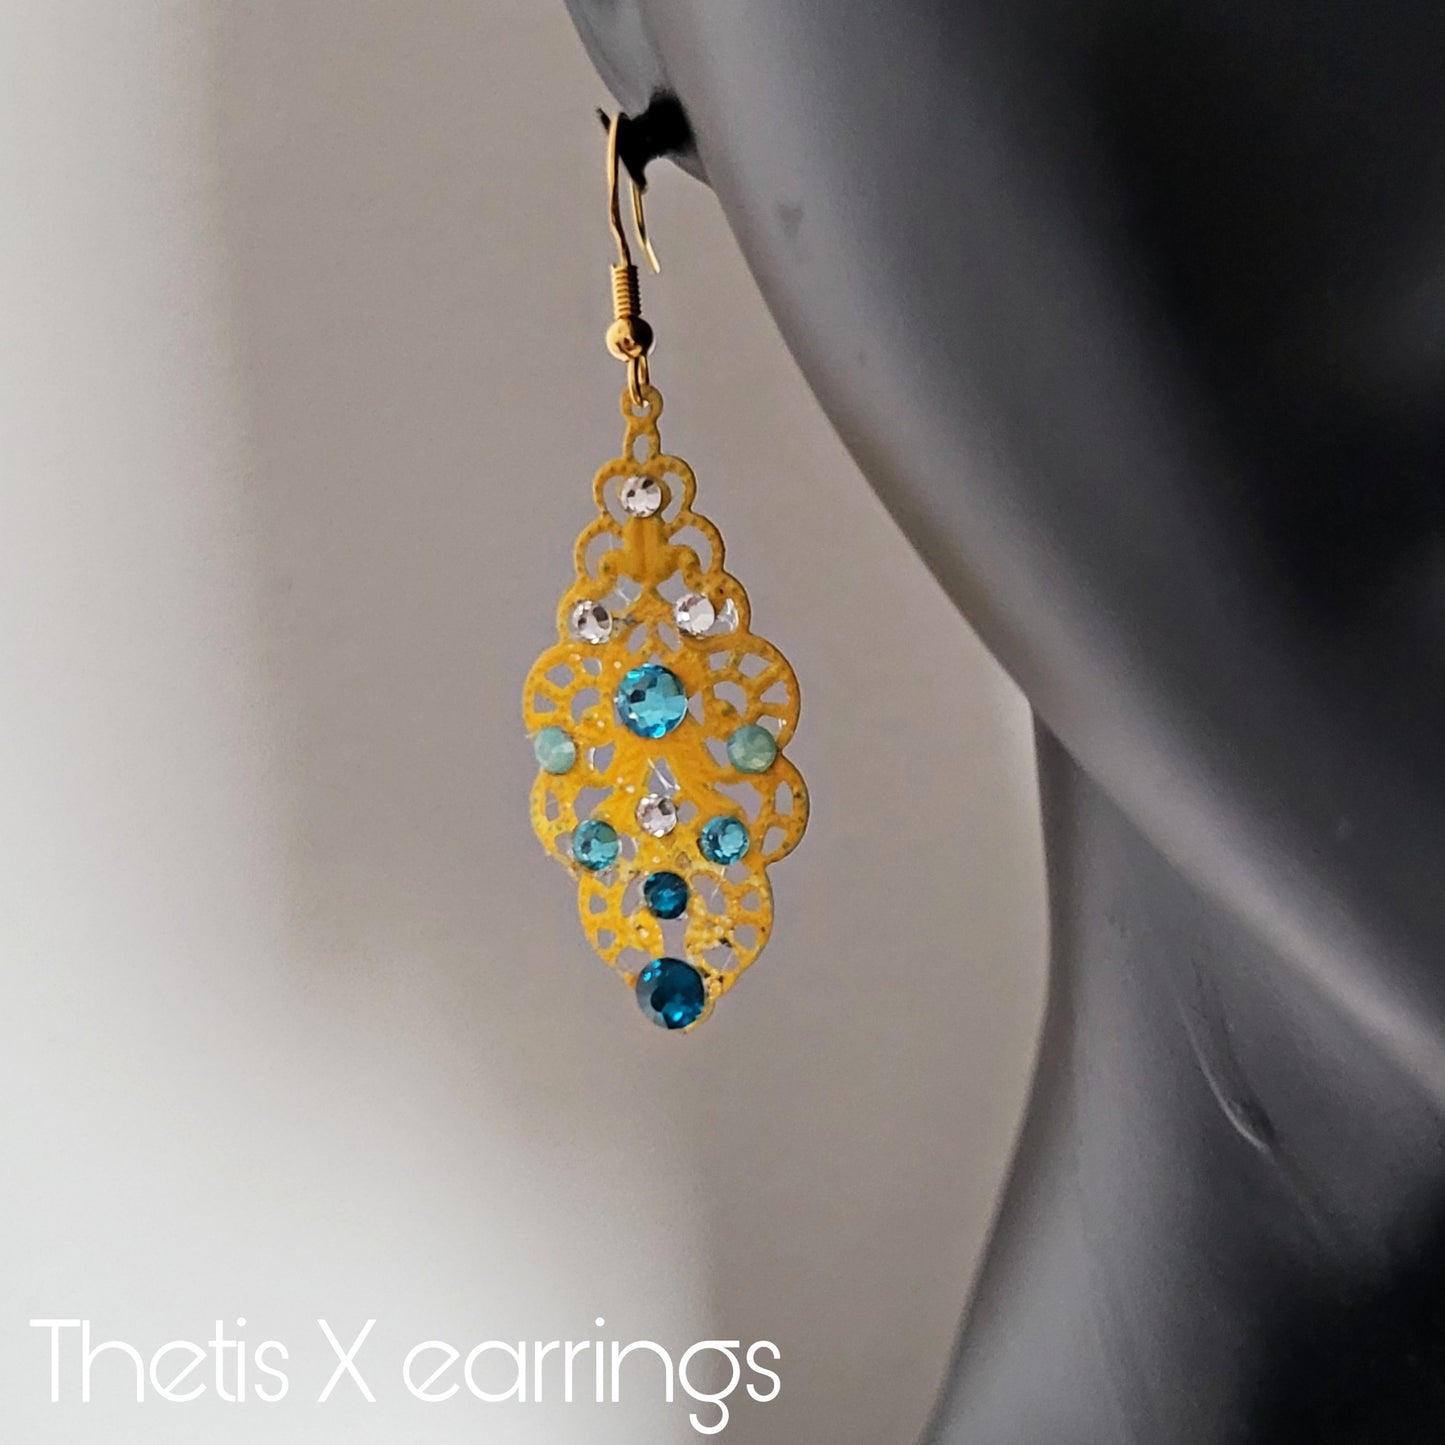 Deusa ex Machina collection: The Thetis earrings